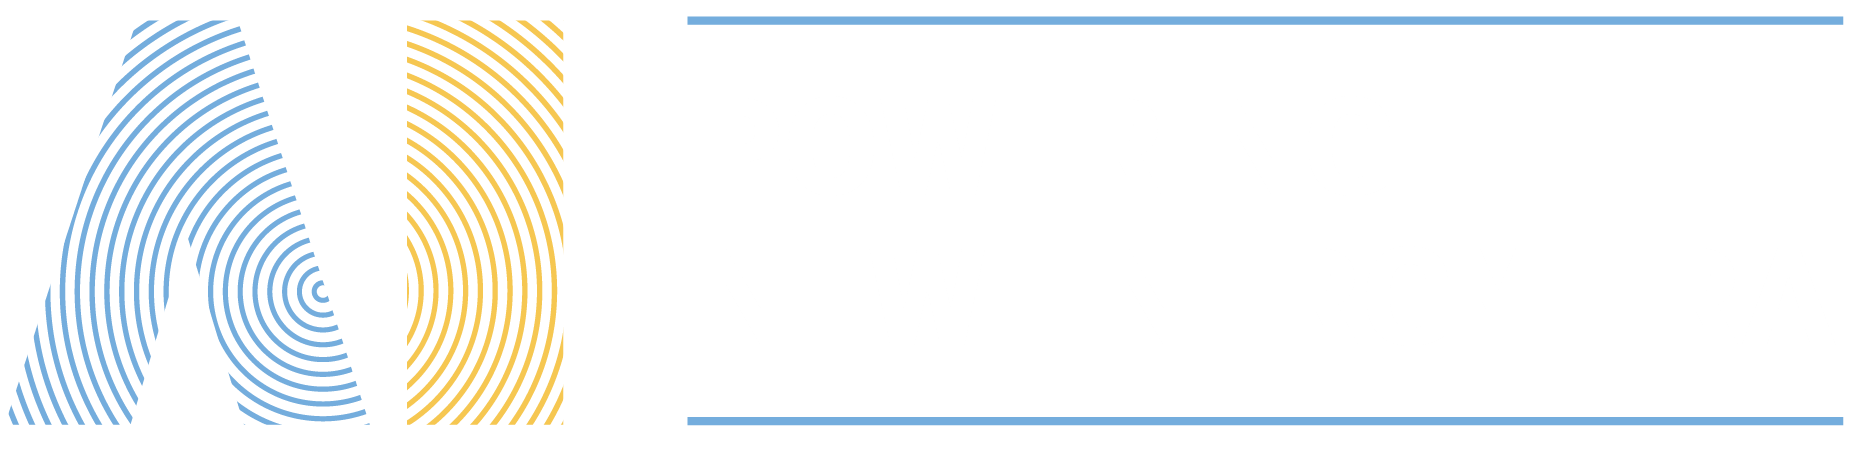 AI: POWERING THE NEW ENERGY ERA